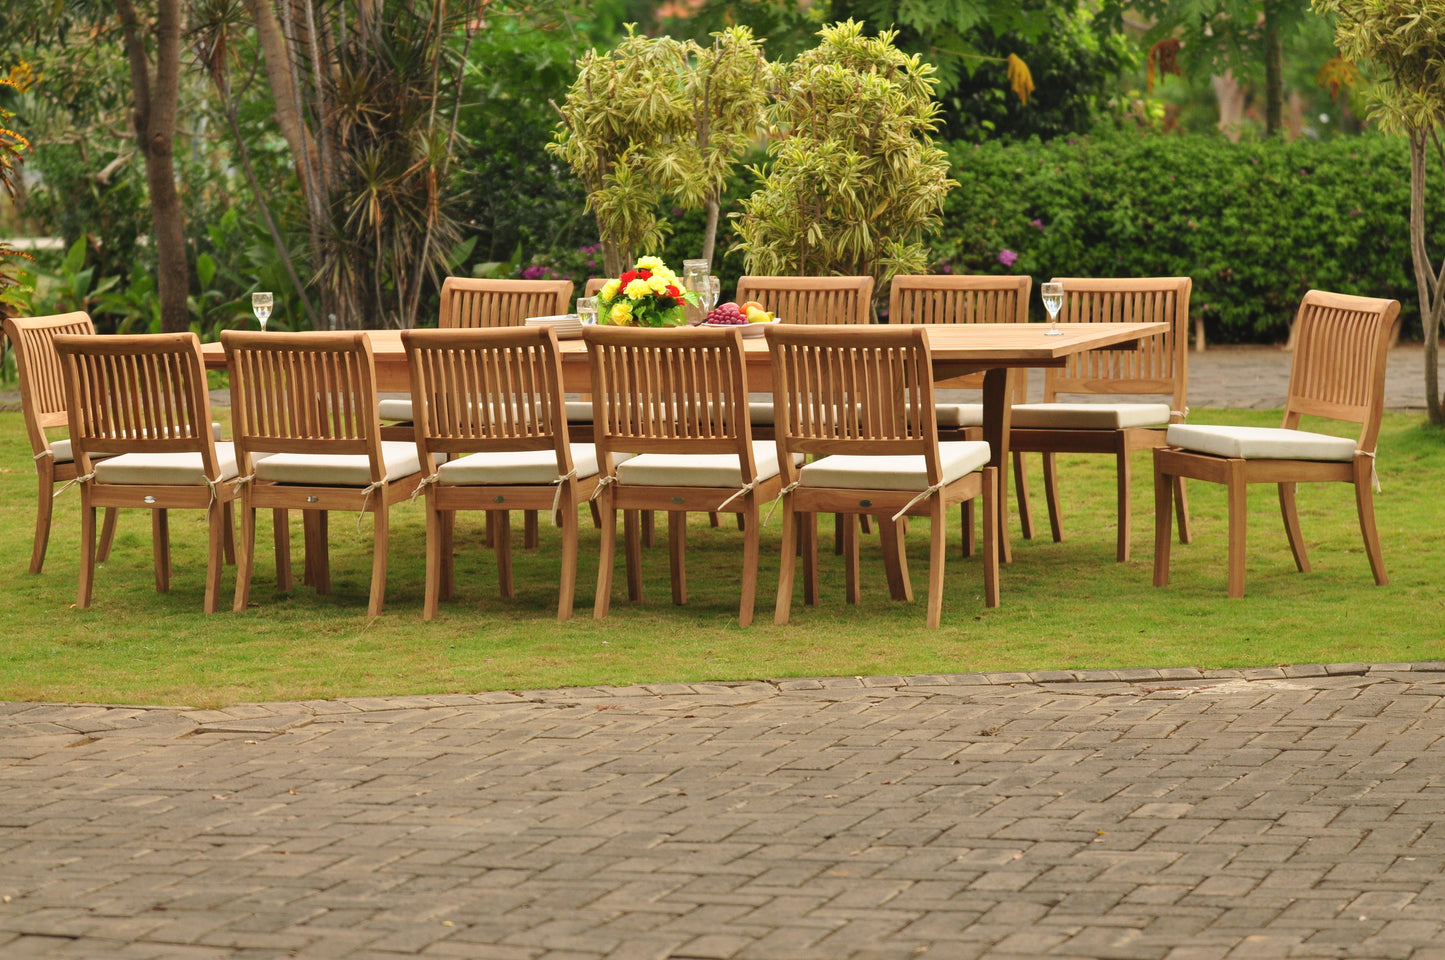 122" Atnas Dining Table with Arbor Armless Chairs